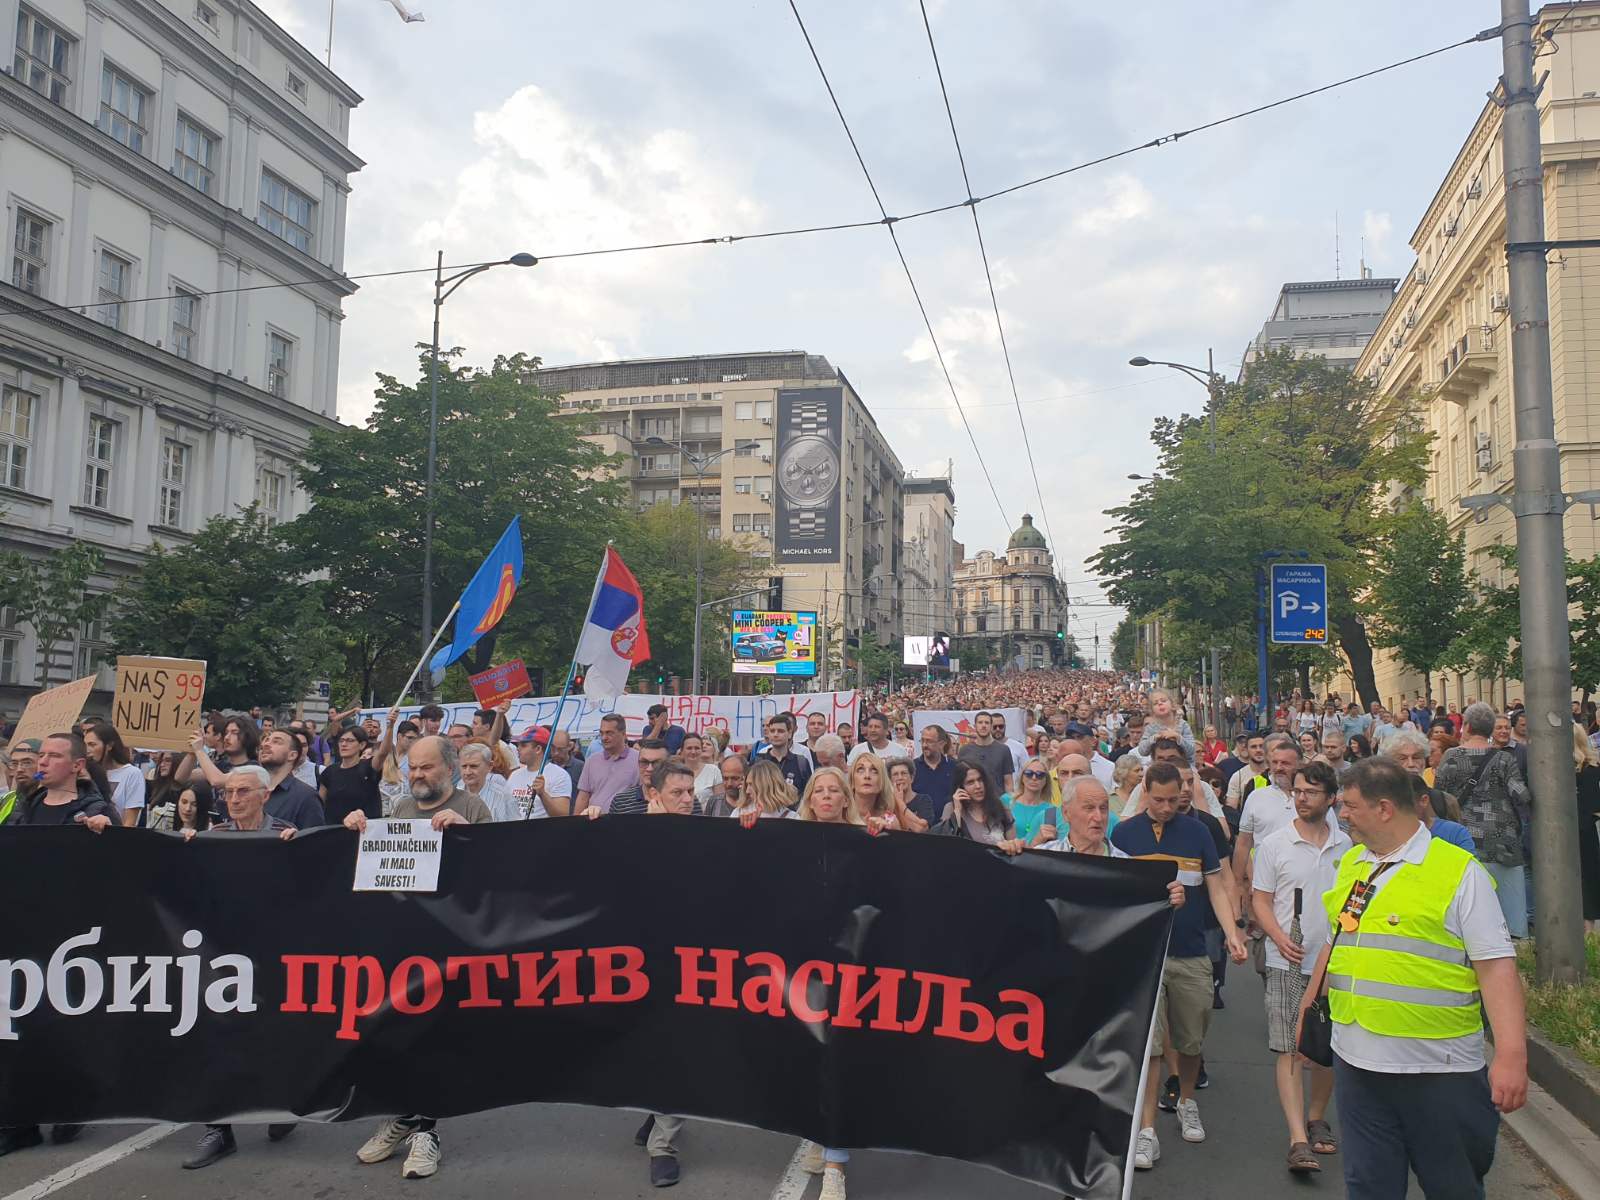 Protest "Srbija protiv nasilja" u preko 10 gradova obeležile šetnje, blokade puteva i zahtevi za ostavkama (FOTO, VIDEO) 48